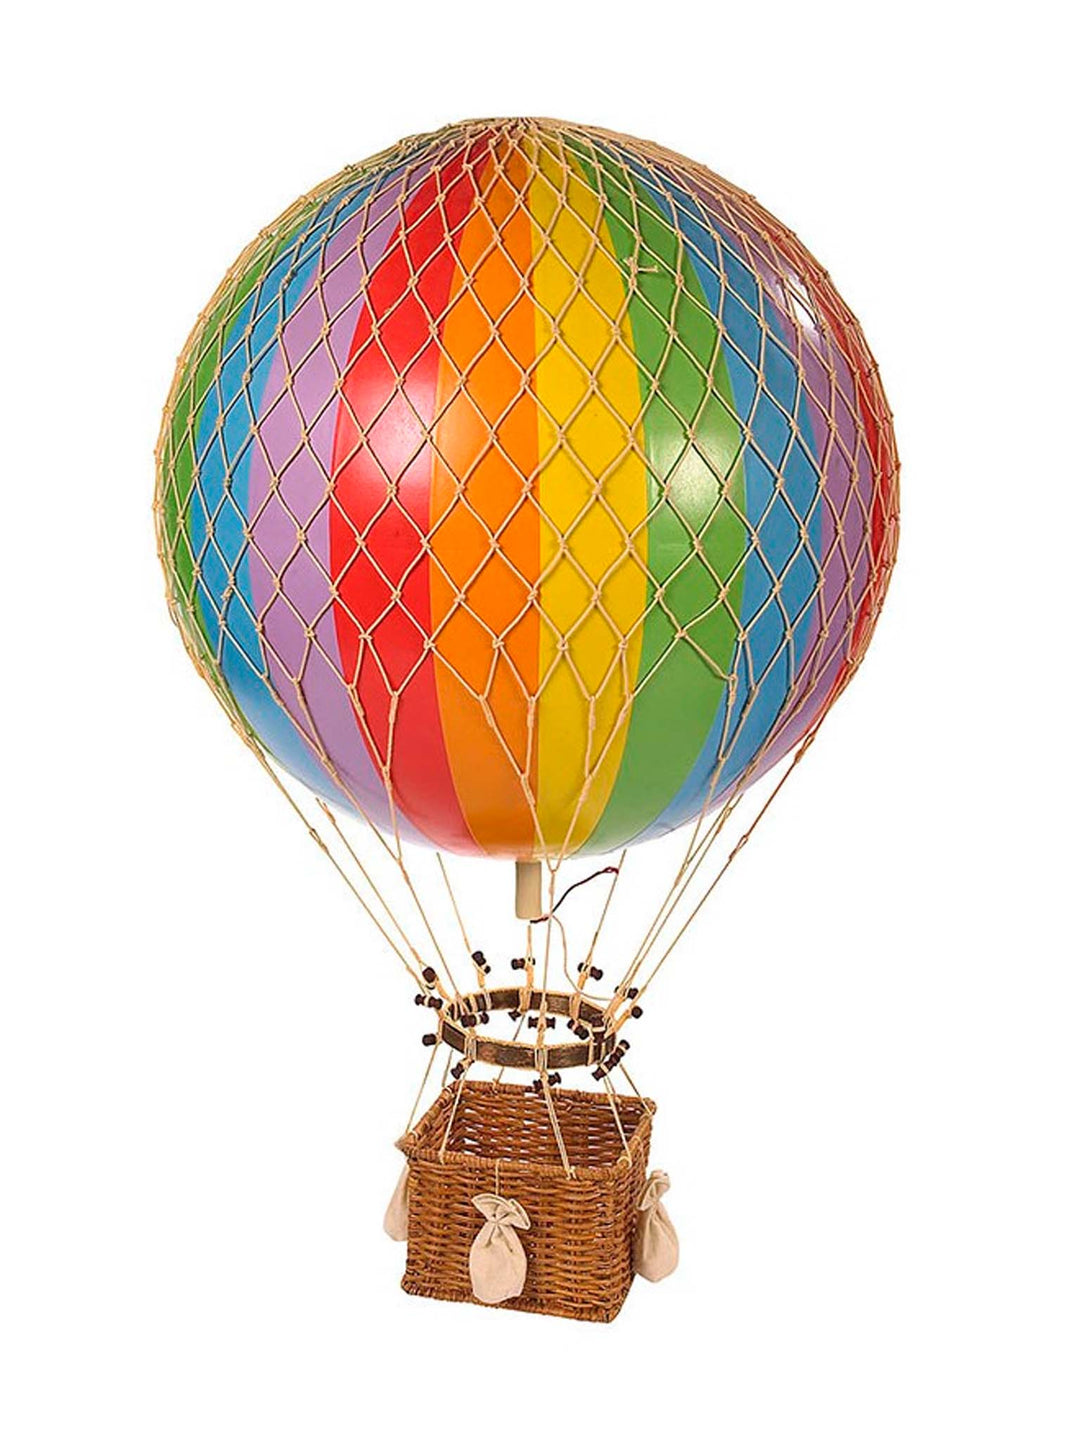 rainbow balloon, red hot air balloon replica model, 